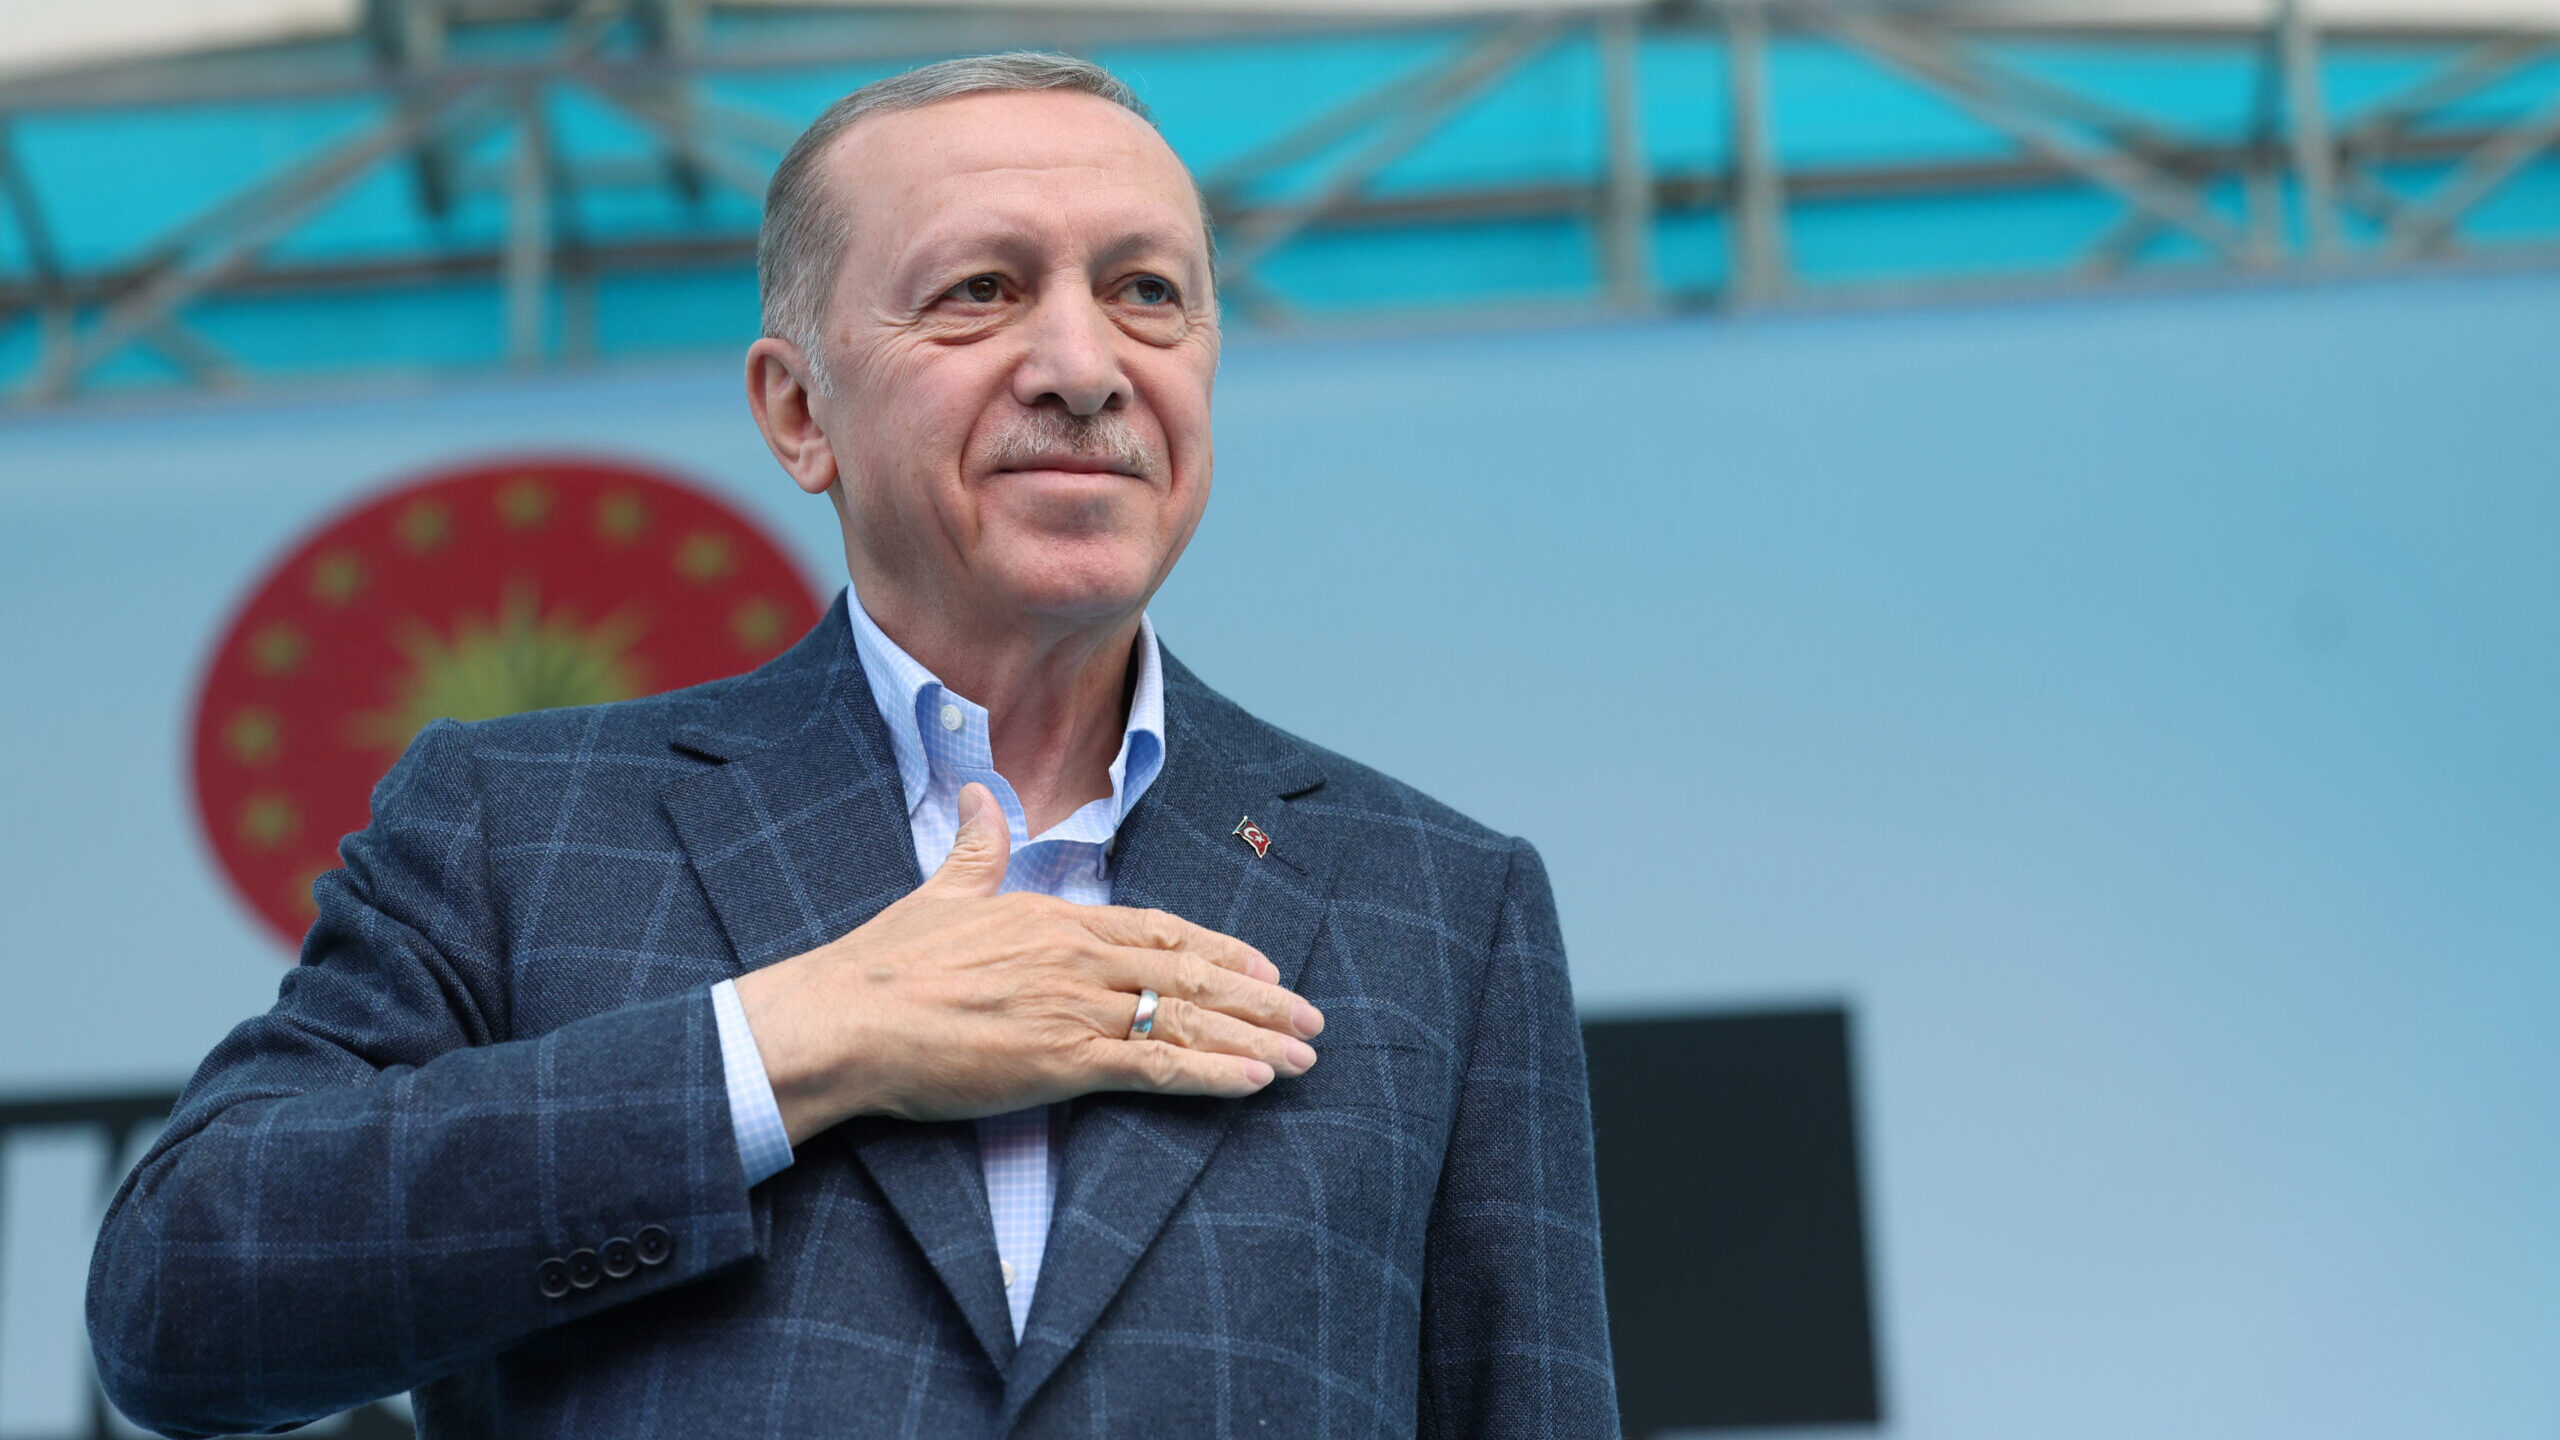 UK denies it’s in talks with Turkey over submarine construction, despite Erdogan comments